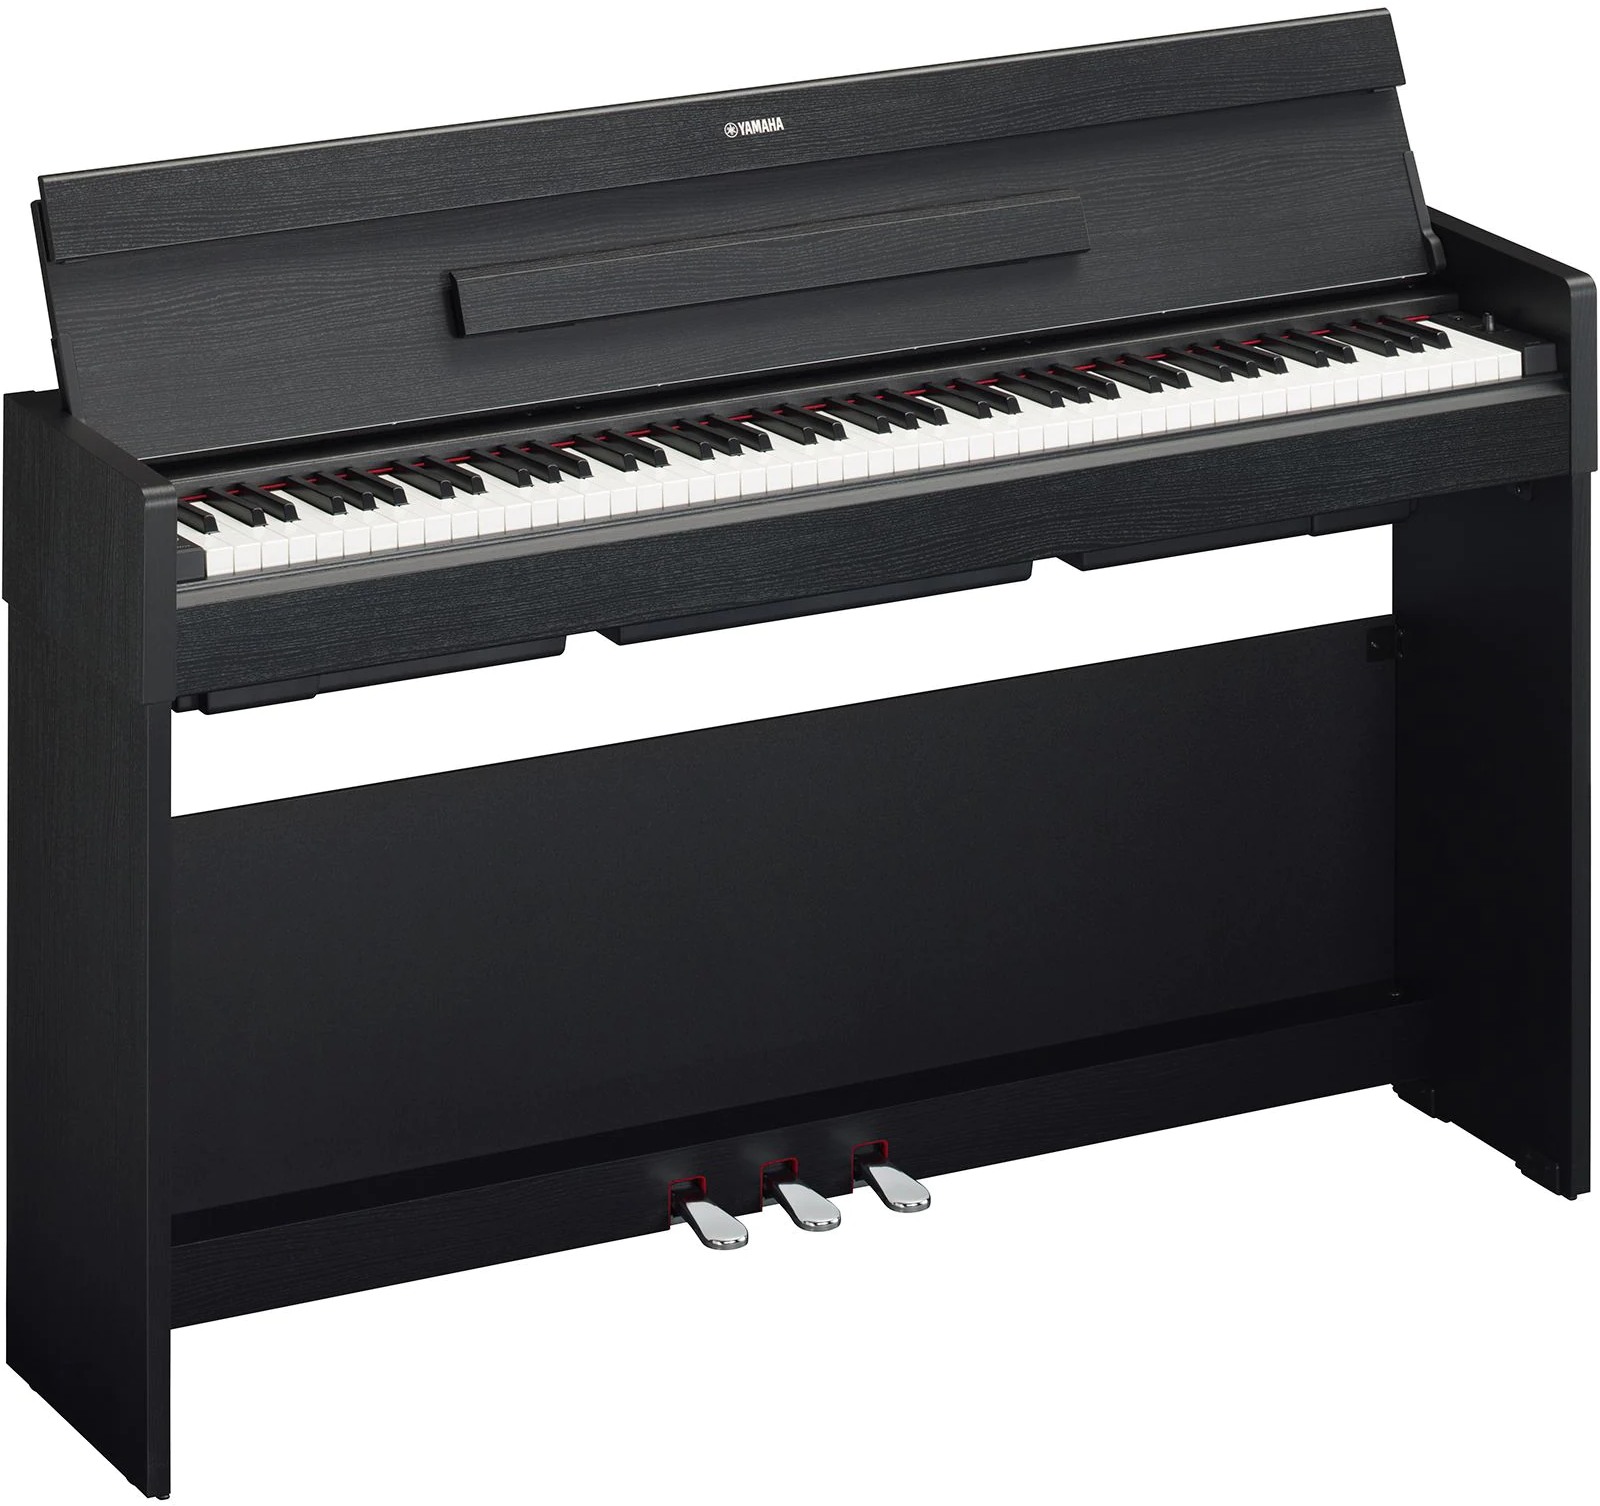 Yamaha Ydp-s35 B - Piano digital con mueble - Variation 1